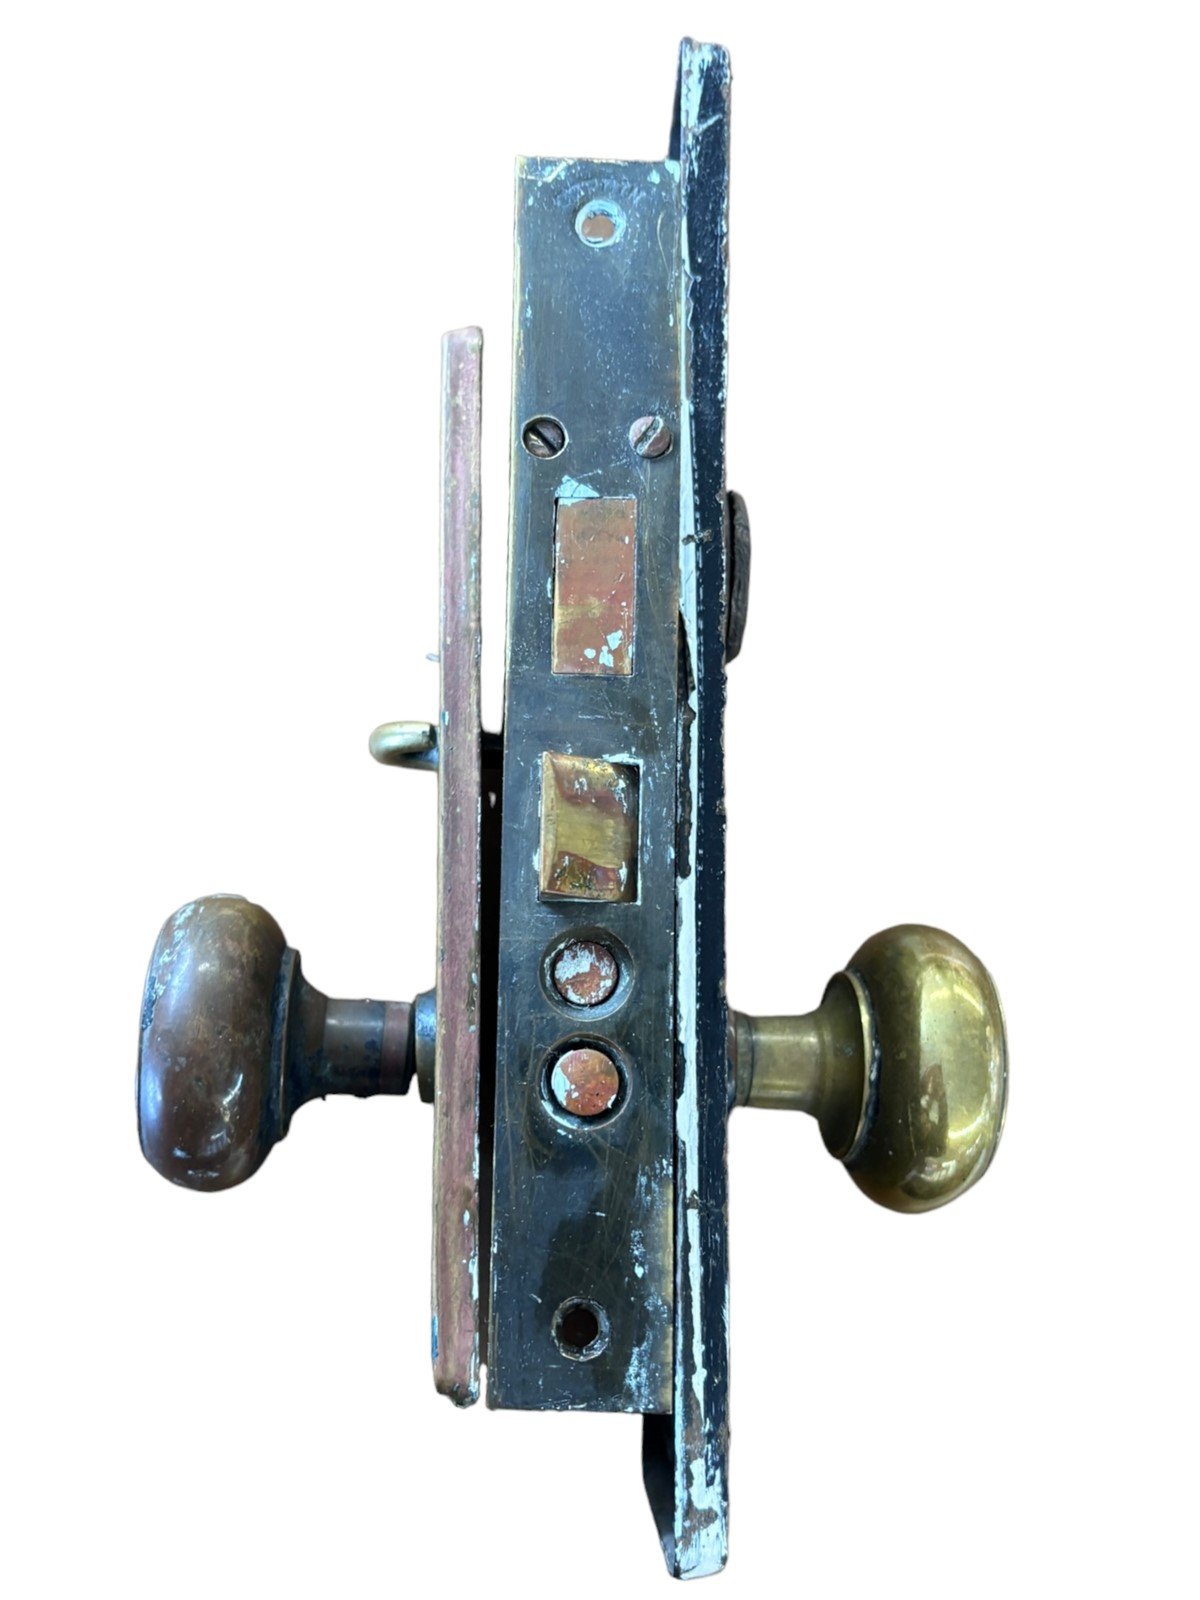 Doorknob and Lock Set No Key Included Lock Works Vintage